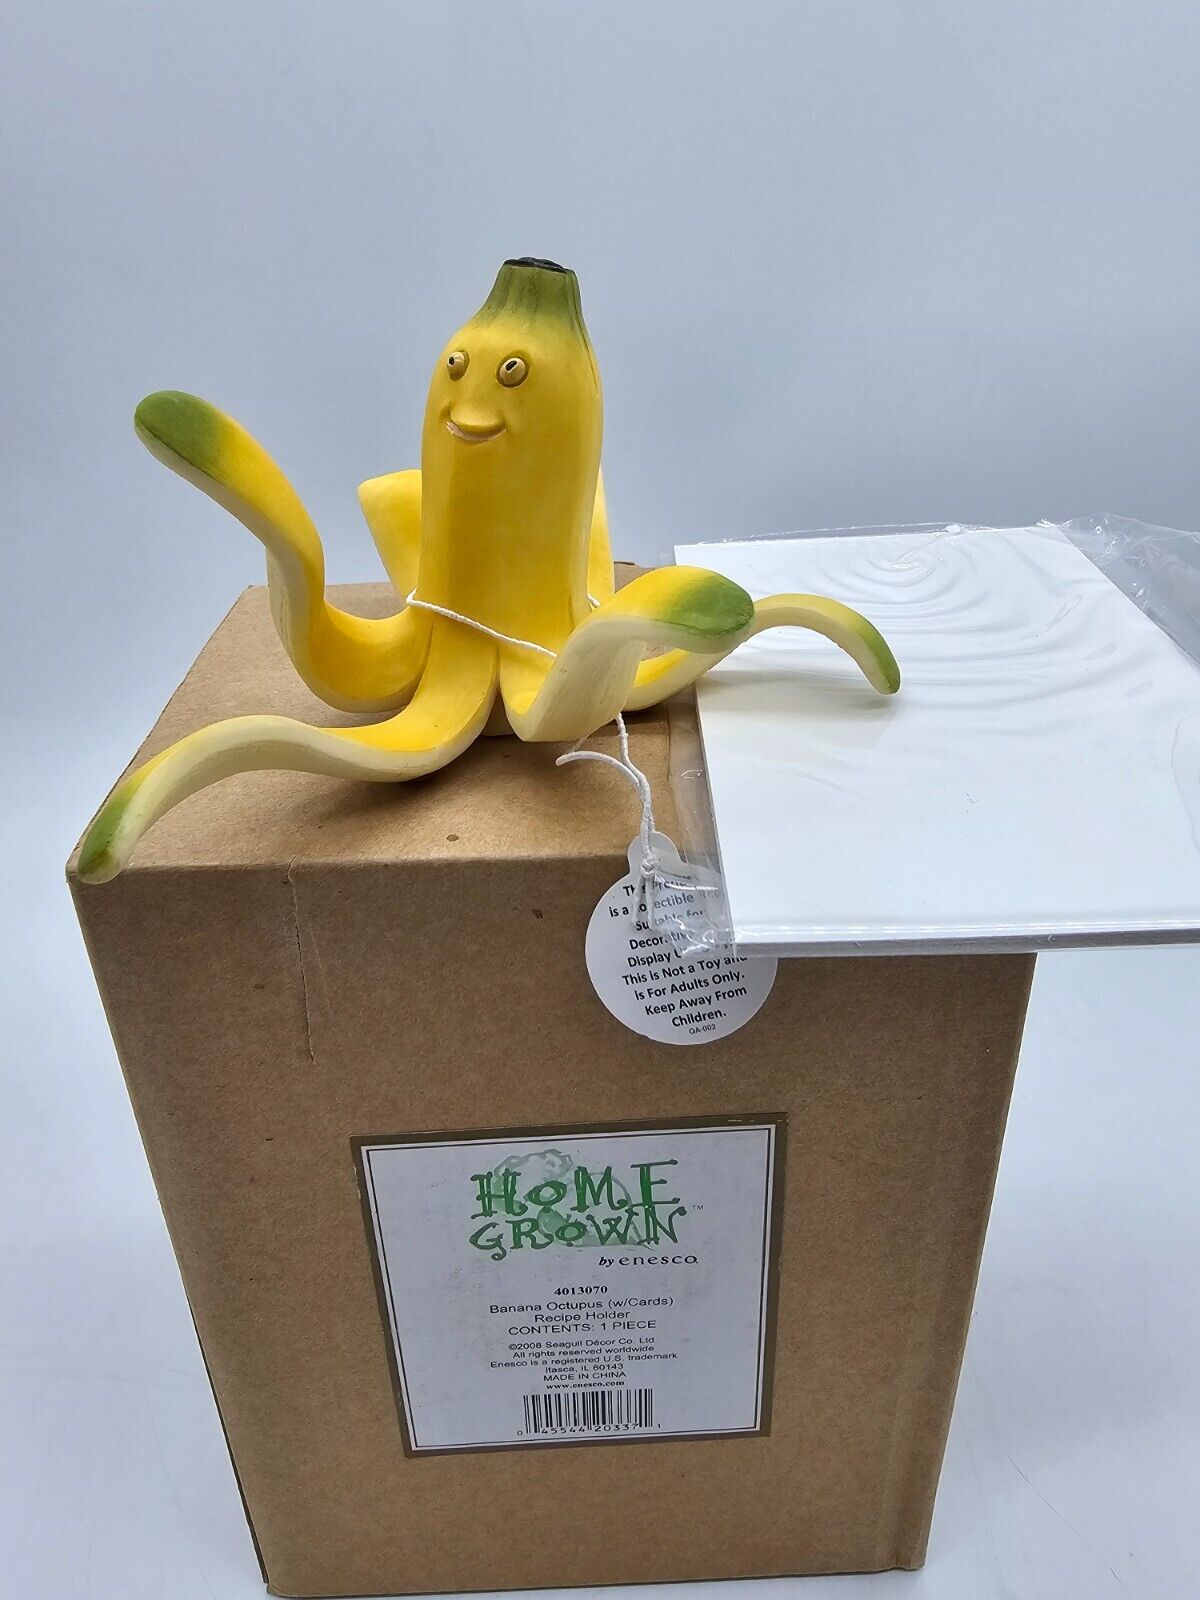 Enesco Home Grown Figurines You choose Figure Fruit Produce Animals New Open Box